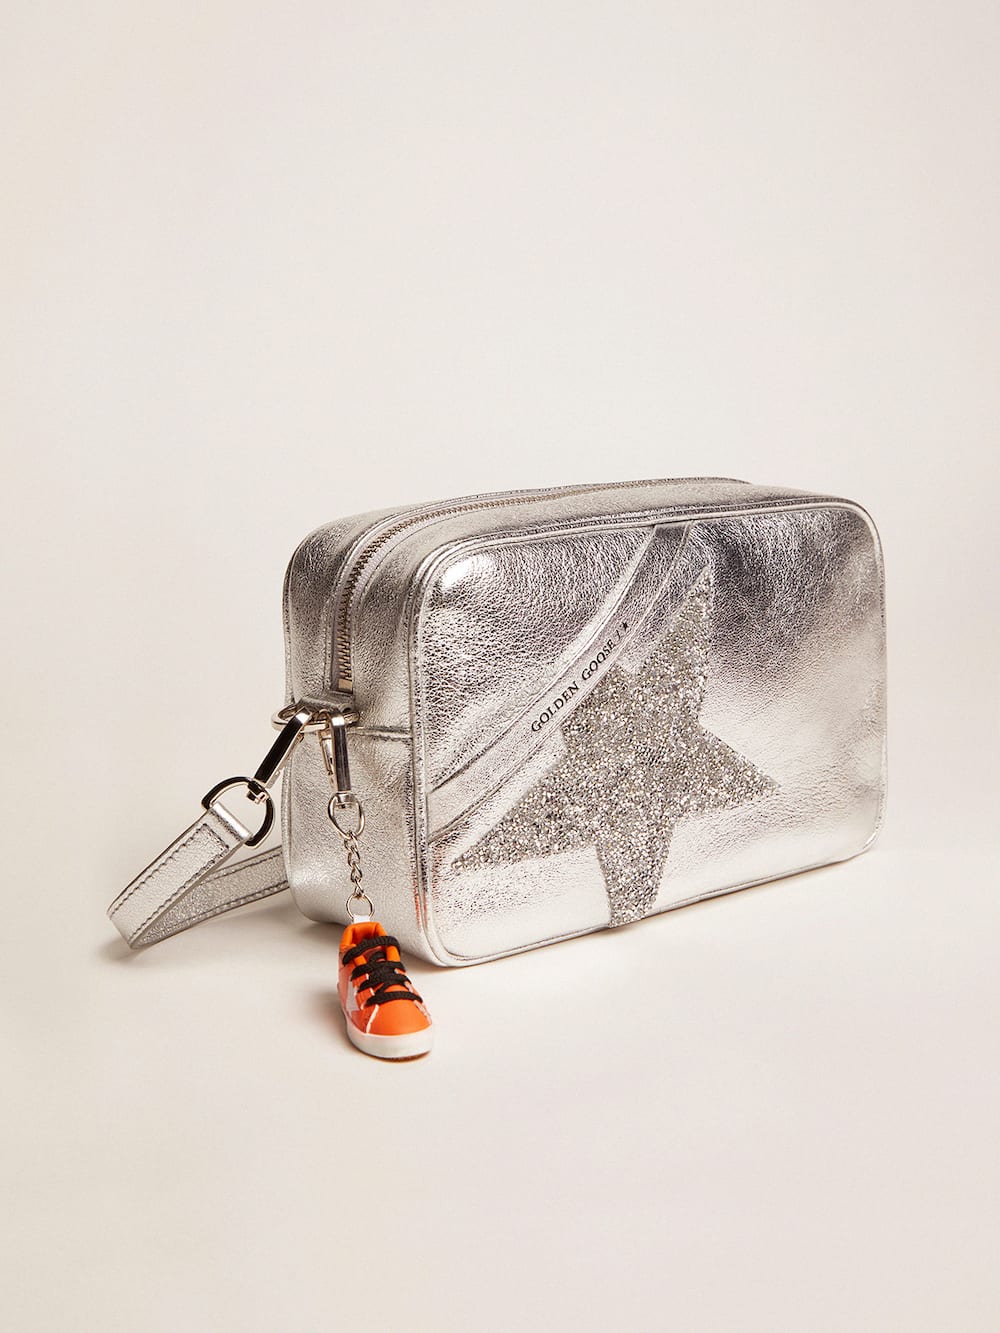 Golden Goose - Silver Star Bag in metallic leather with Swarovski crystal star in 